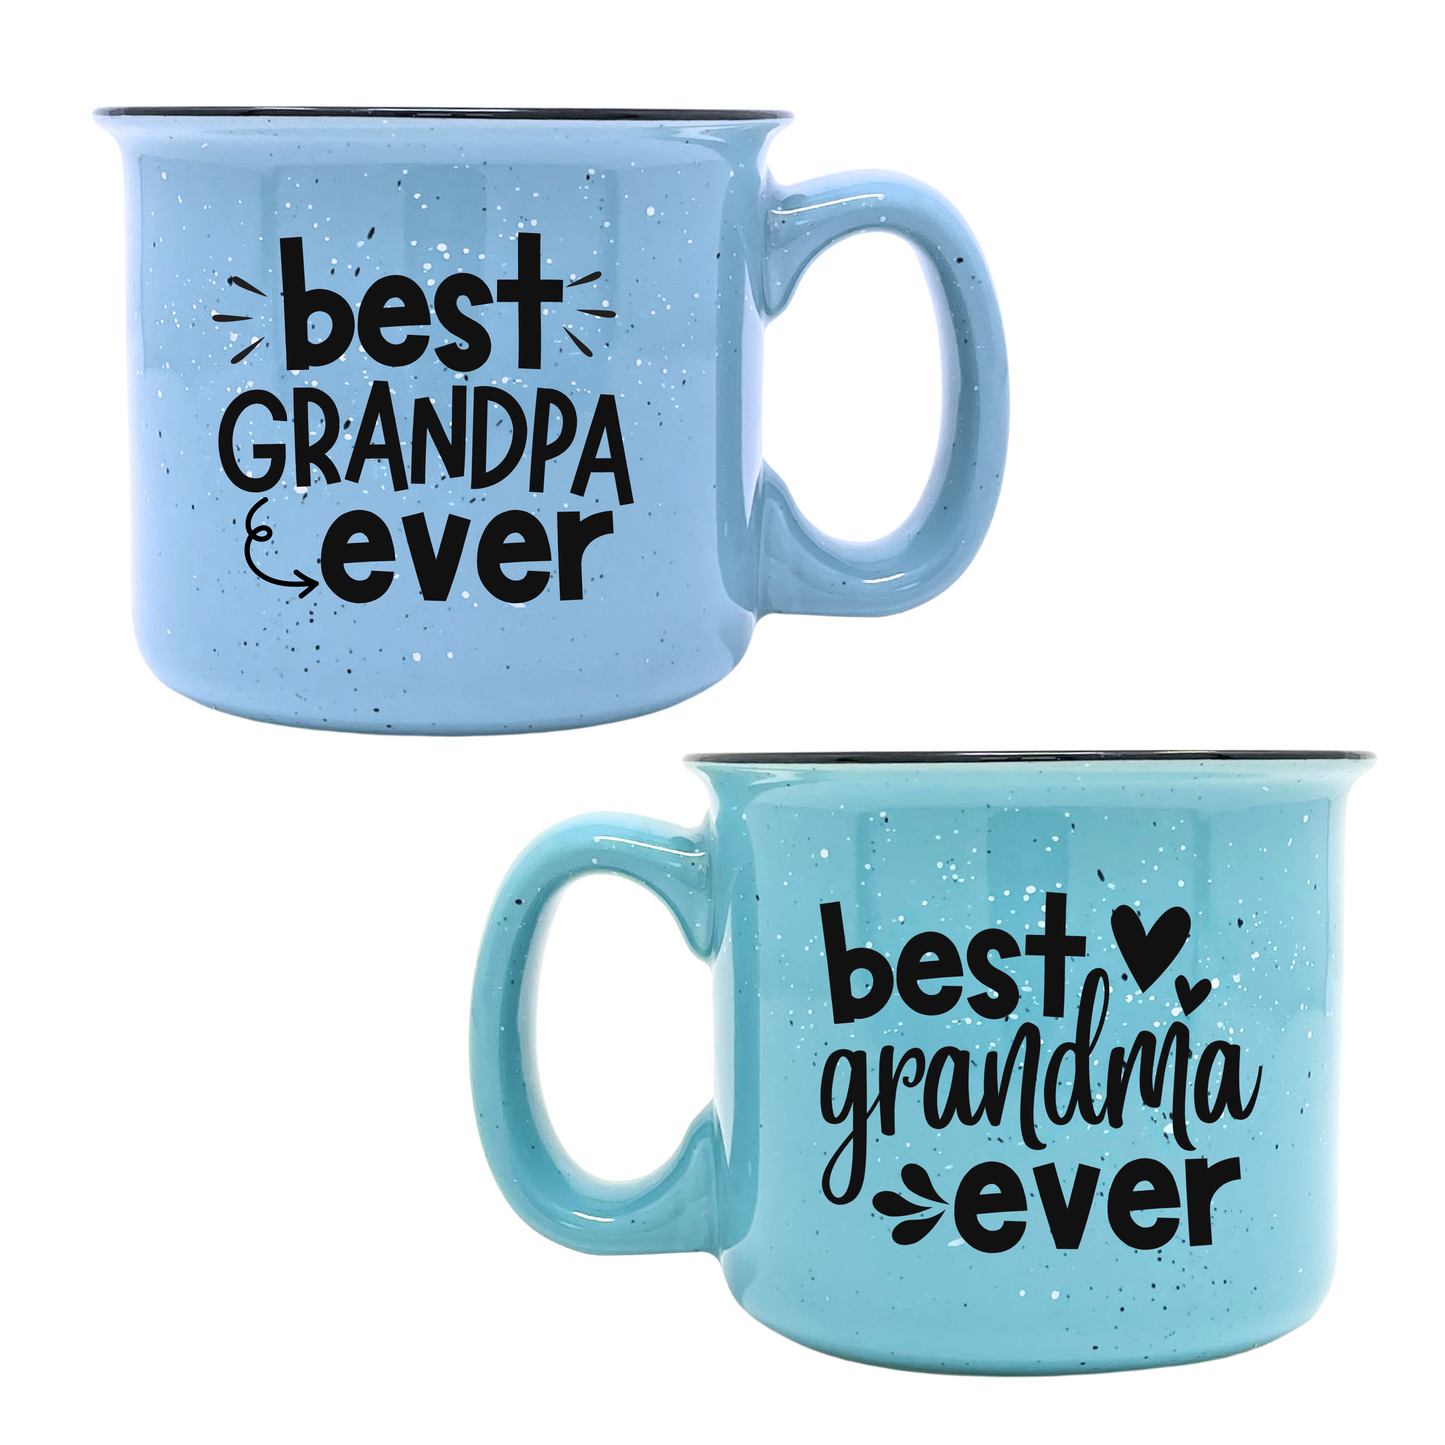 Best Grandma Grandpa Ever Cute Coffee Mug for Grandma, Grandmother - Grandma Gifts, Mother's Day, Christmas, Birthday (Best Grandma Ever and Best Grandpa Ever Gift Set)